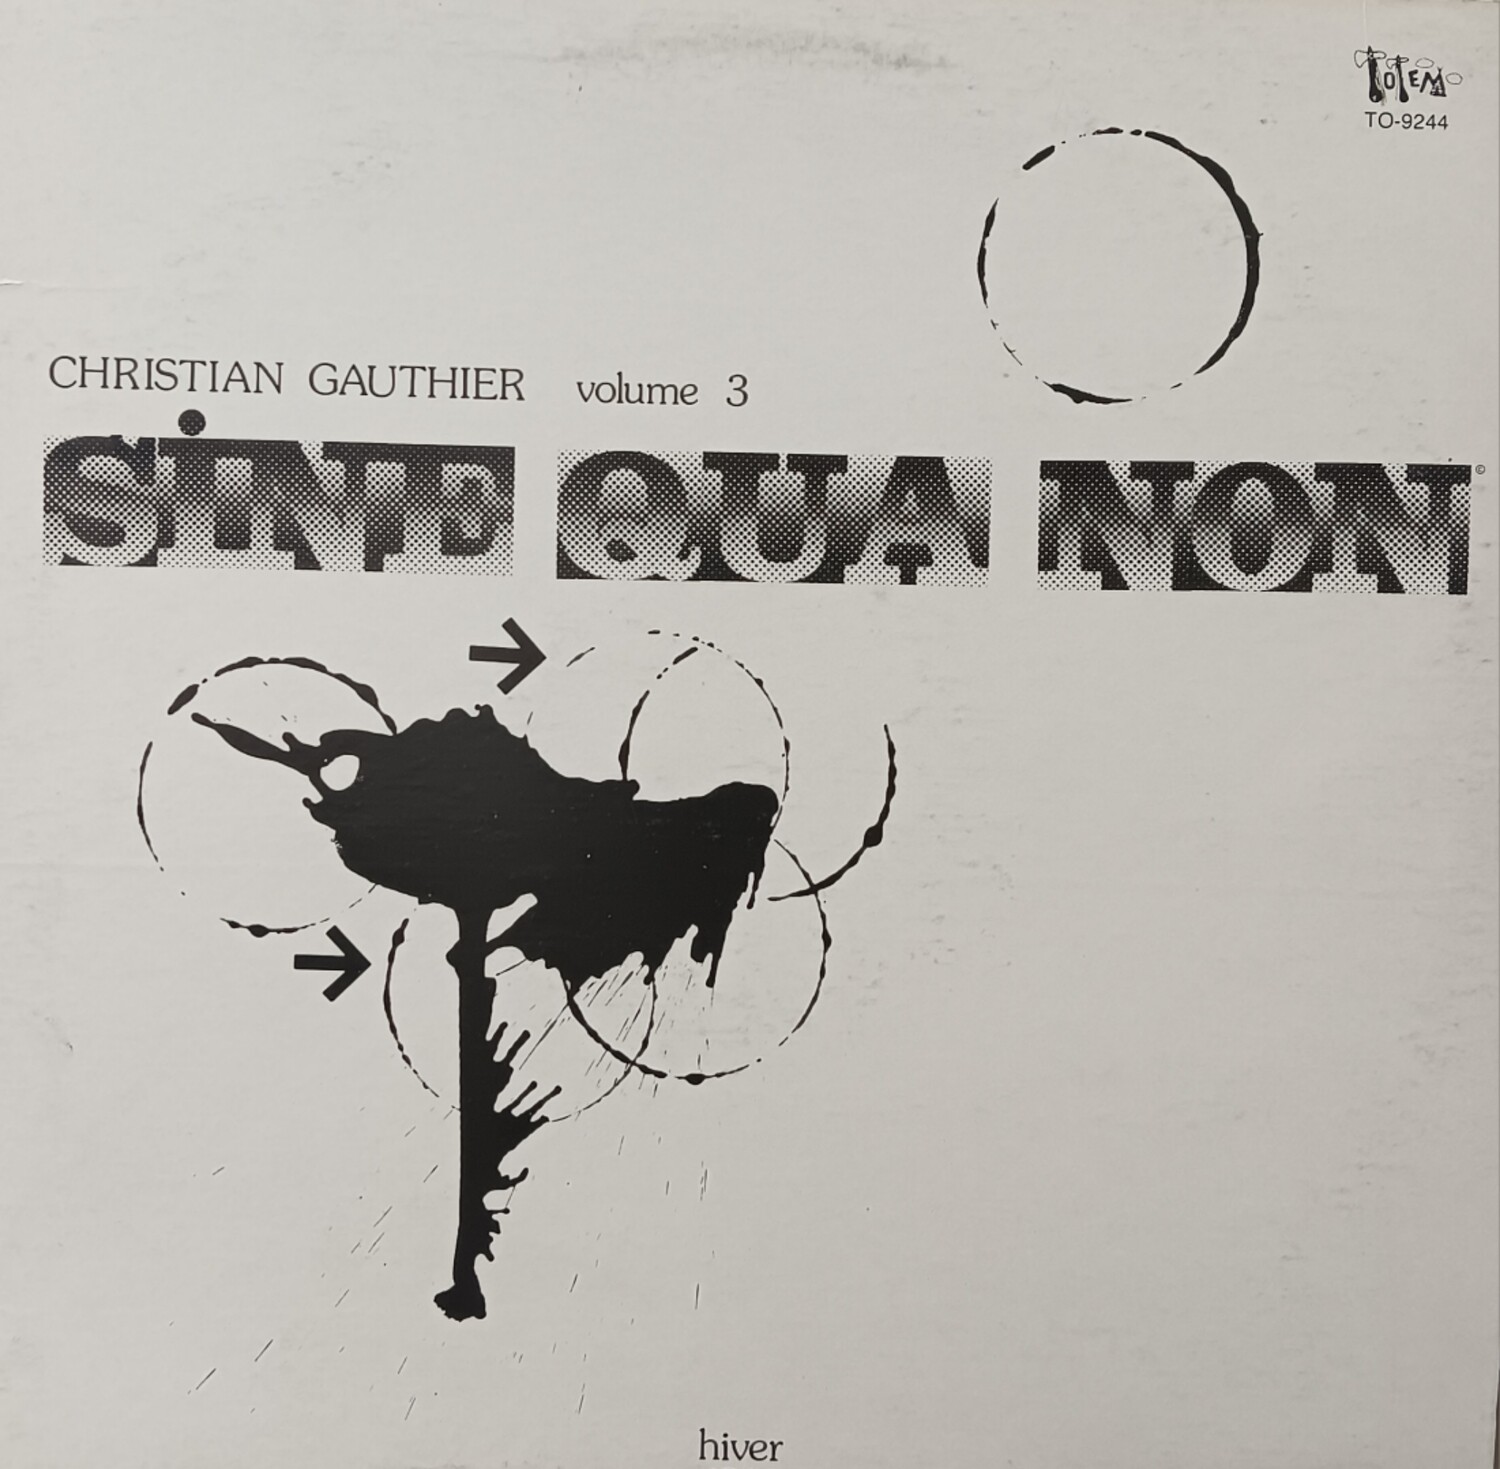 Christian Gauthier - Sine Qua Non volume 3 Hiver 1979